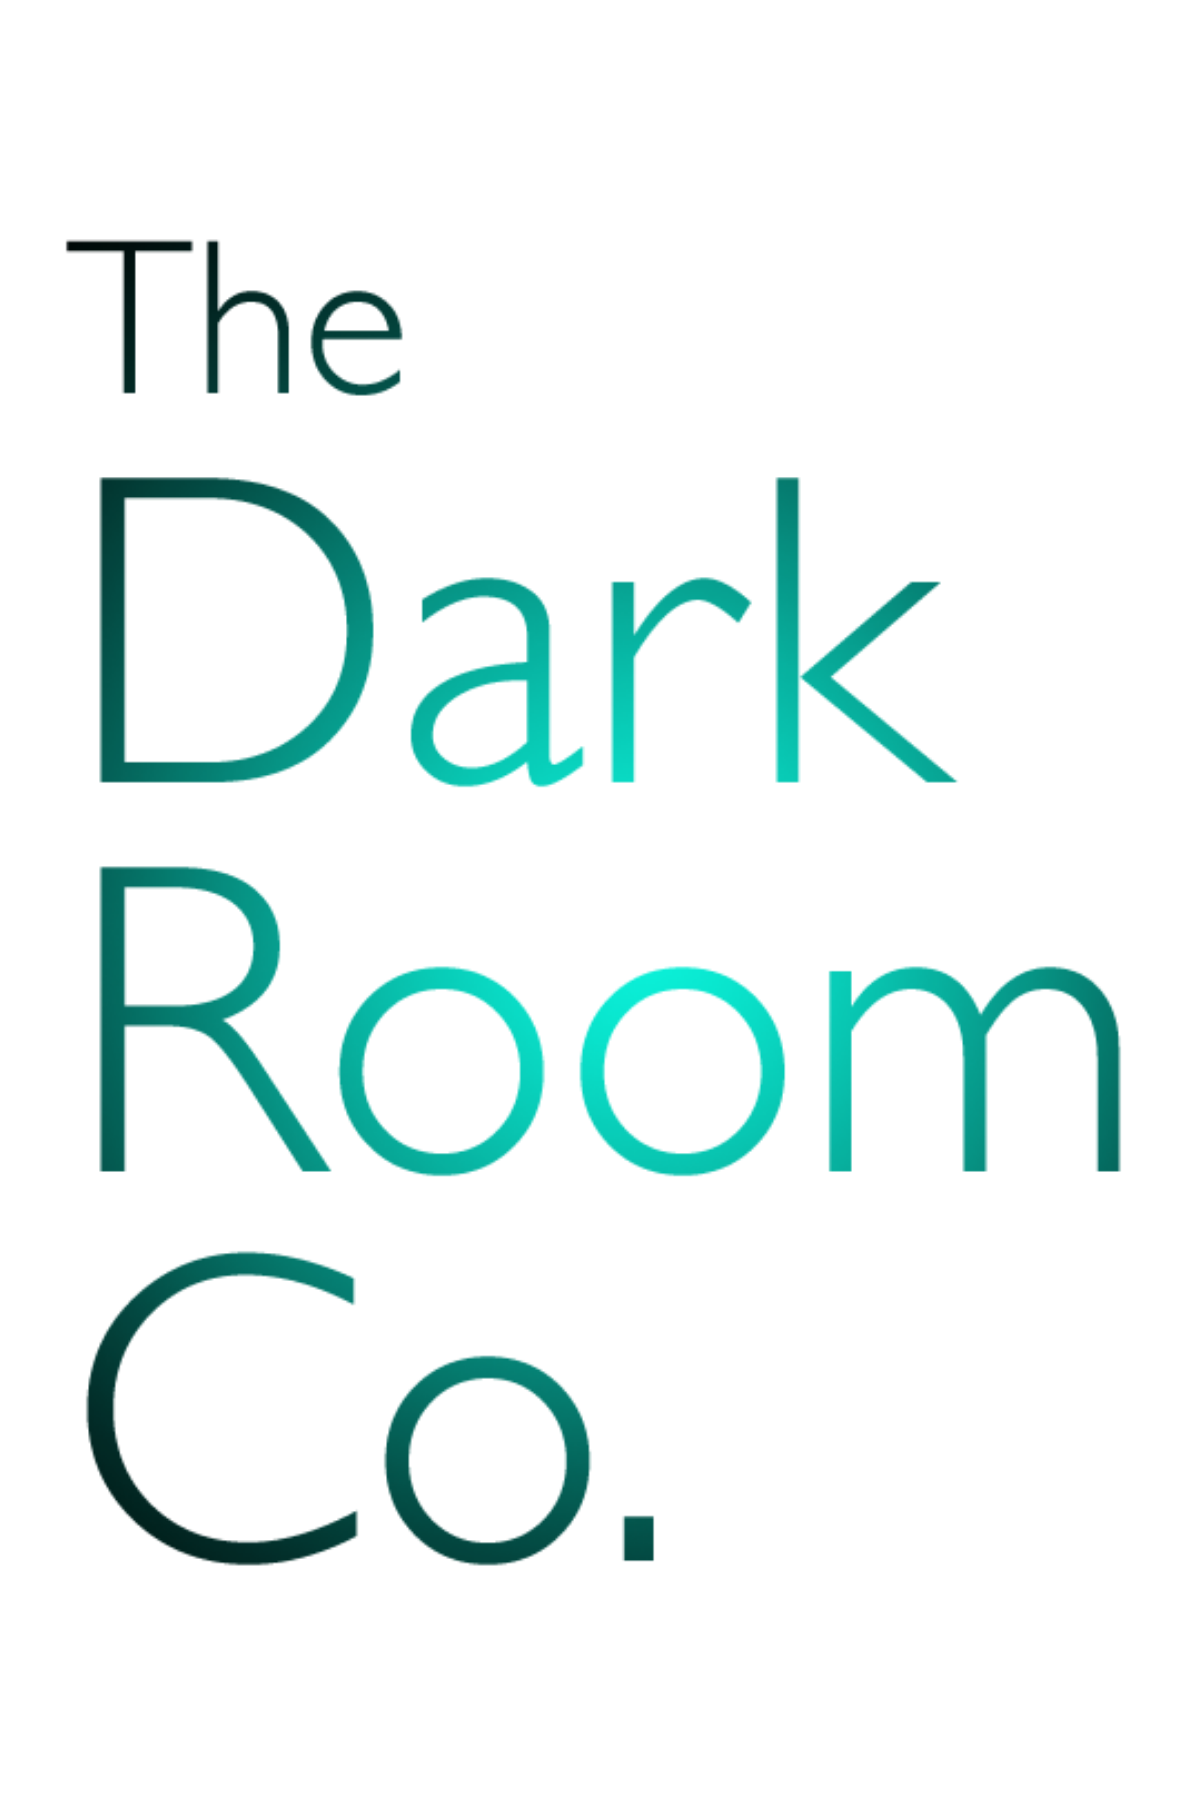 The Dark Room Co.